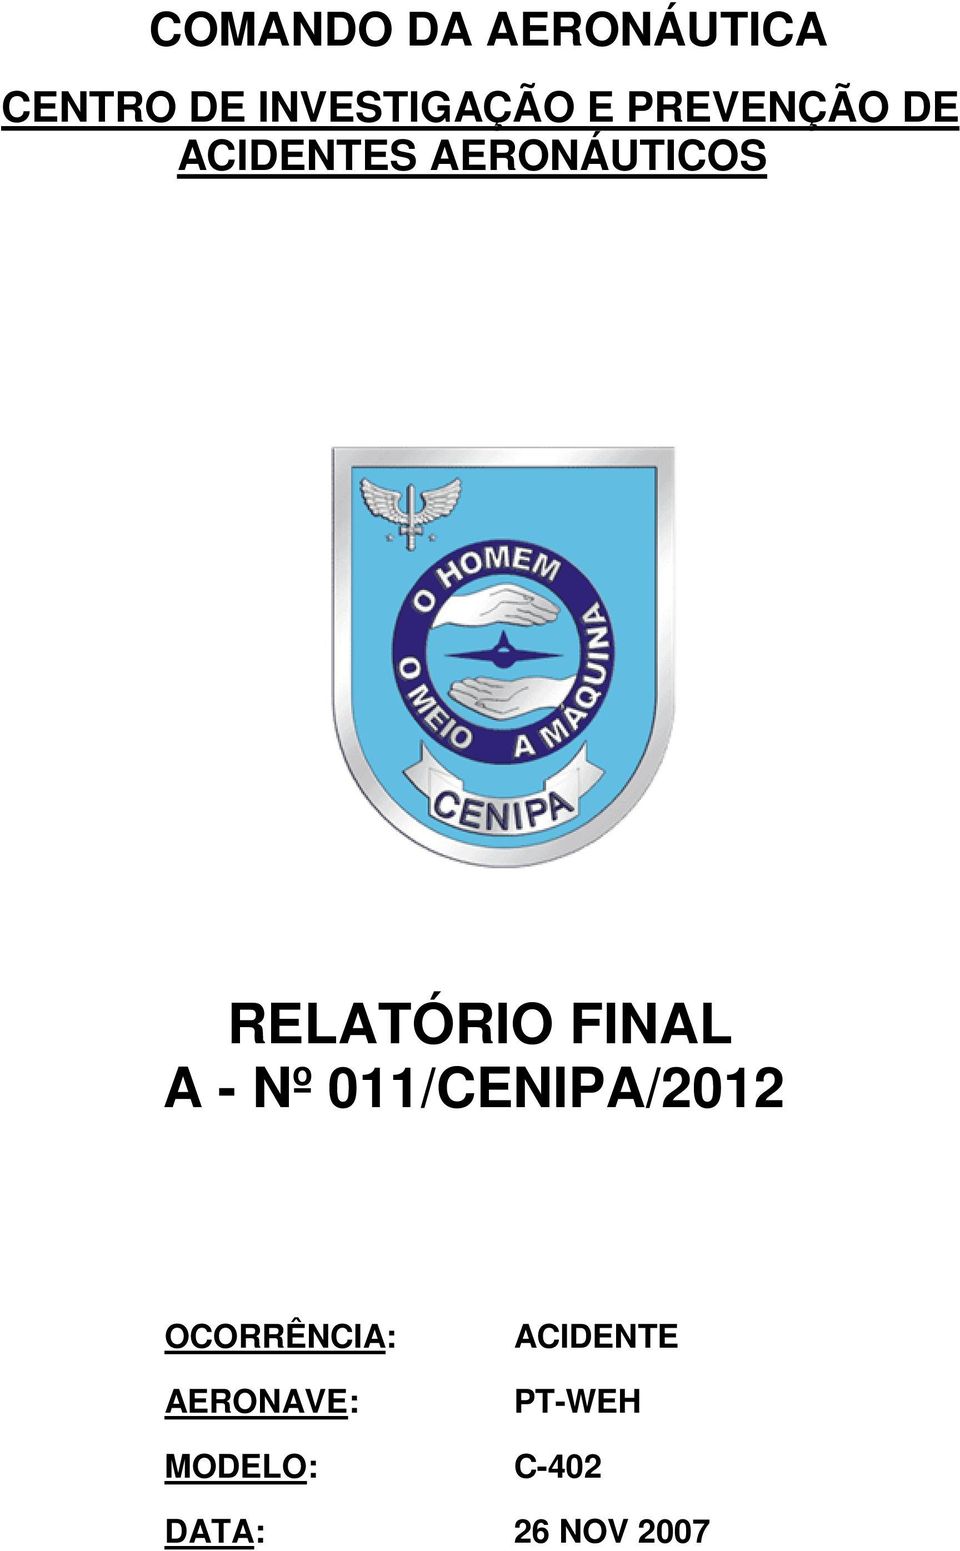 FINAL A - Nº 011/CENIPA/2012 OCORRÊNCIA: